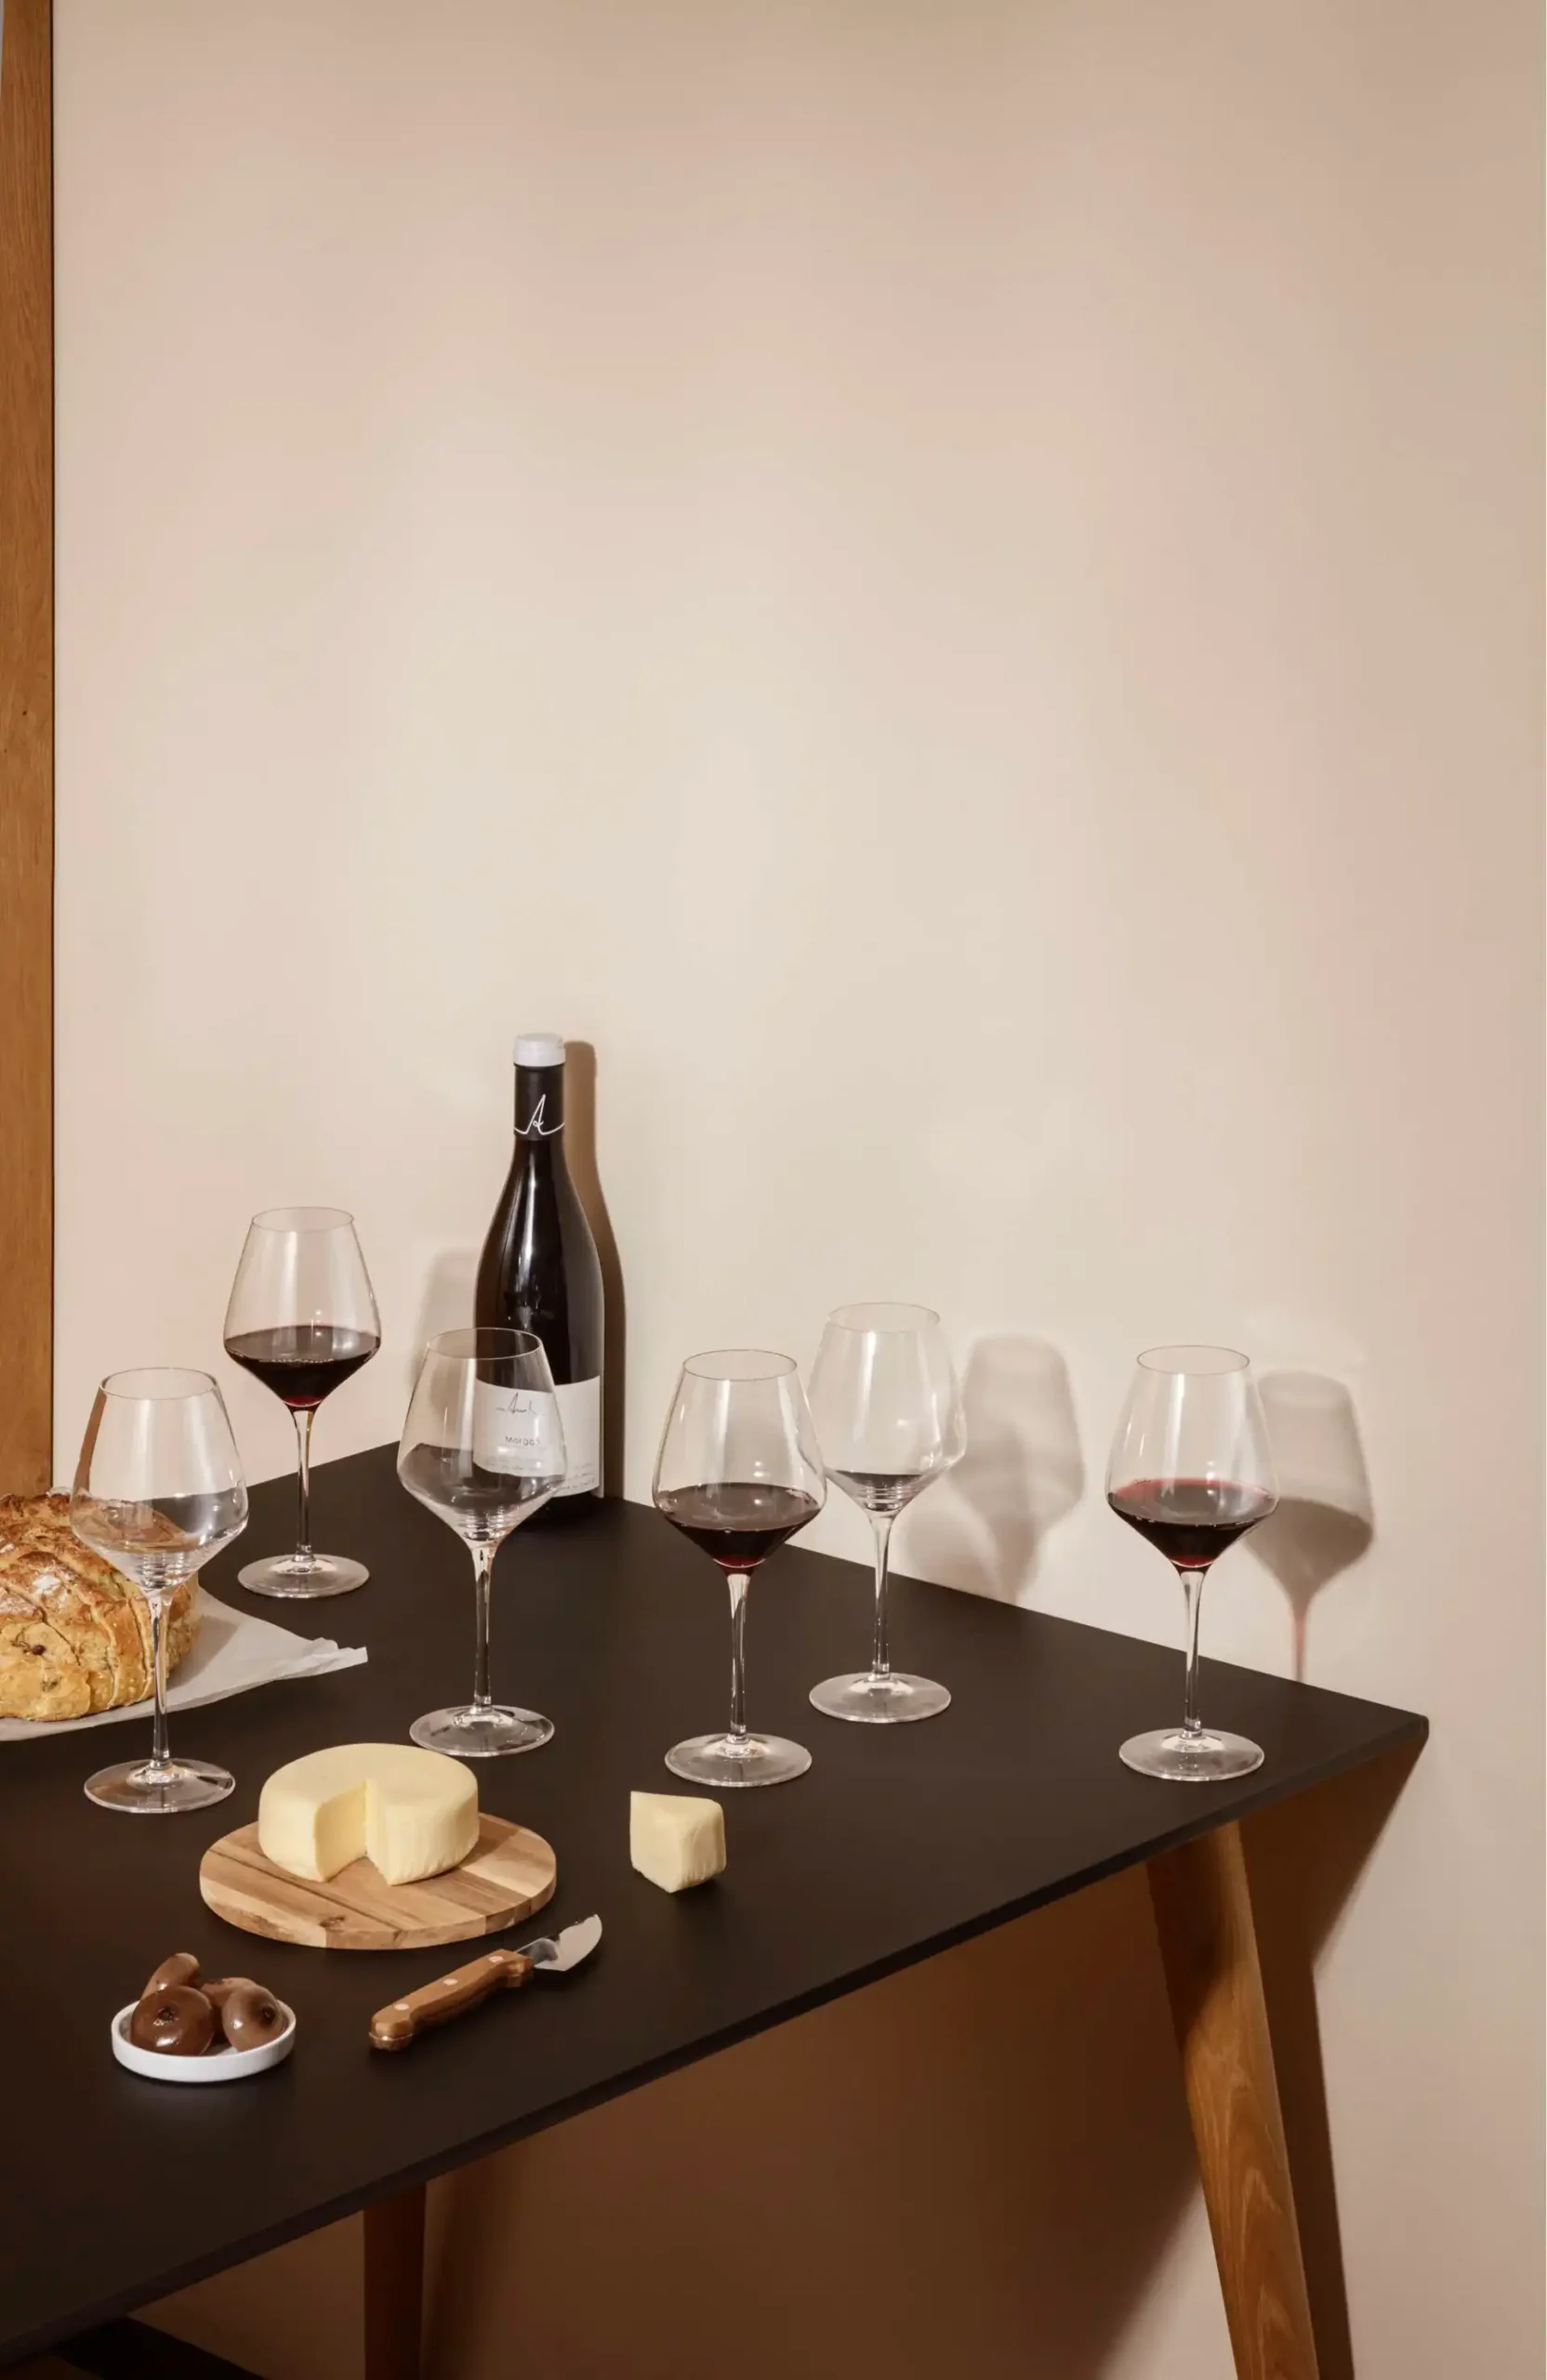 541201-legio-nova-wine-glasses-redwine-table-p.webp